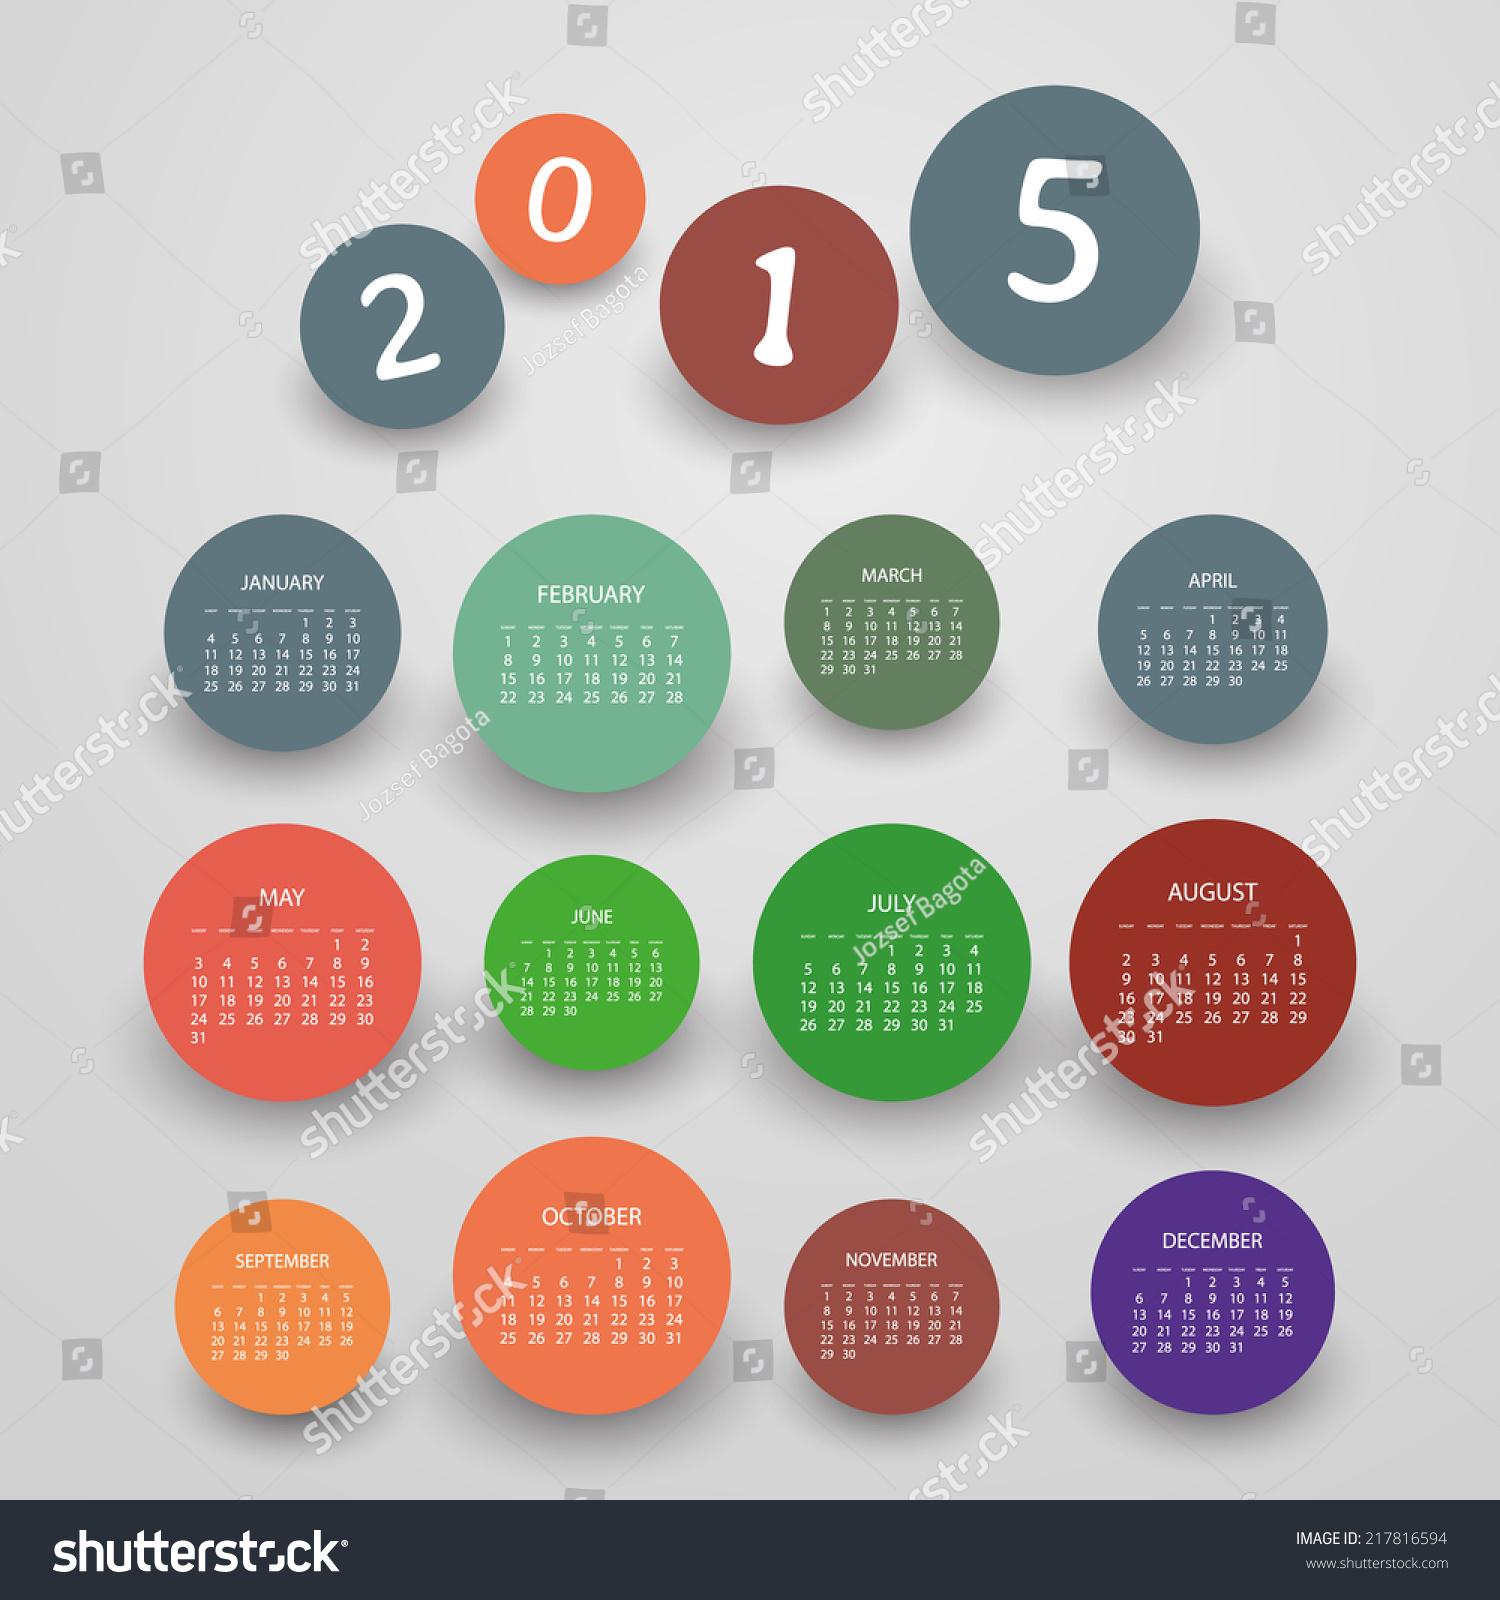 Edit Vectors Free Online - Calendar 2015 | Shutterstock Editor